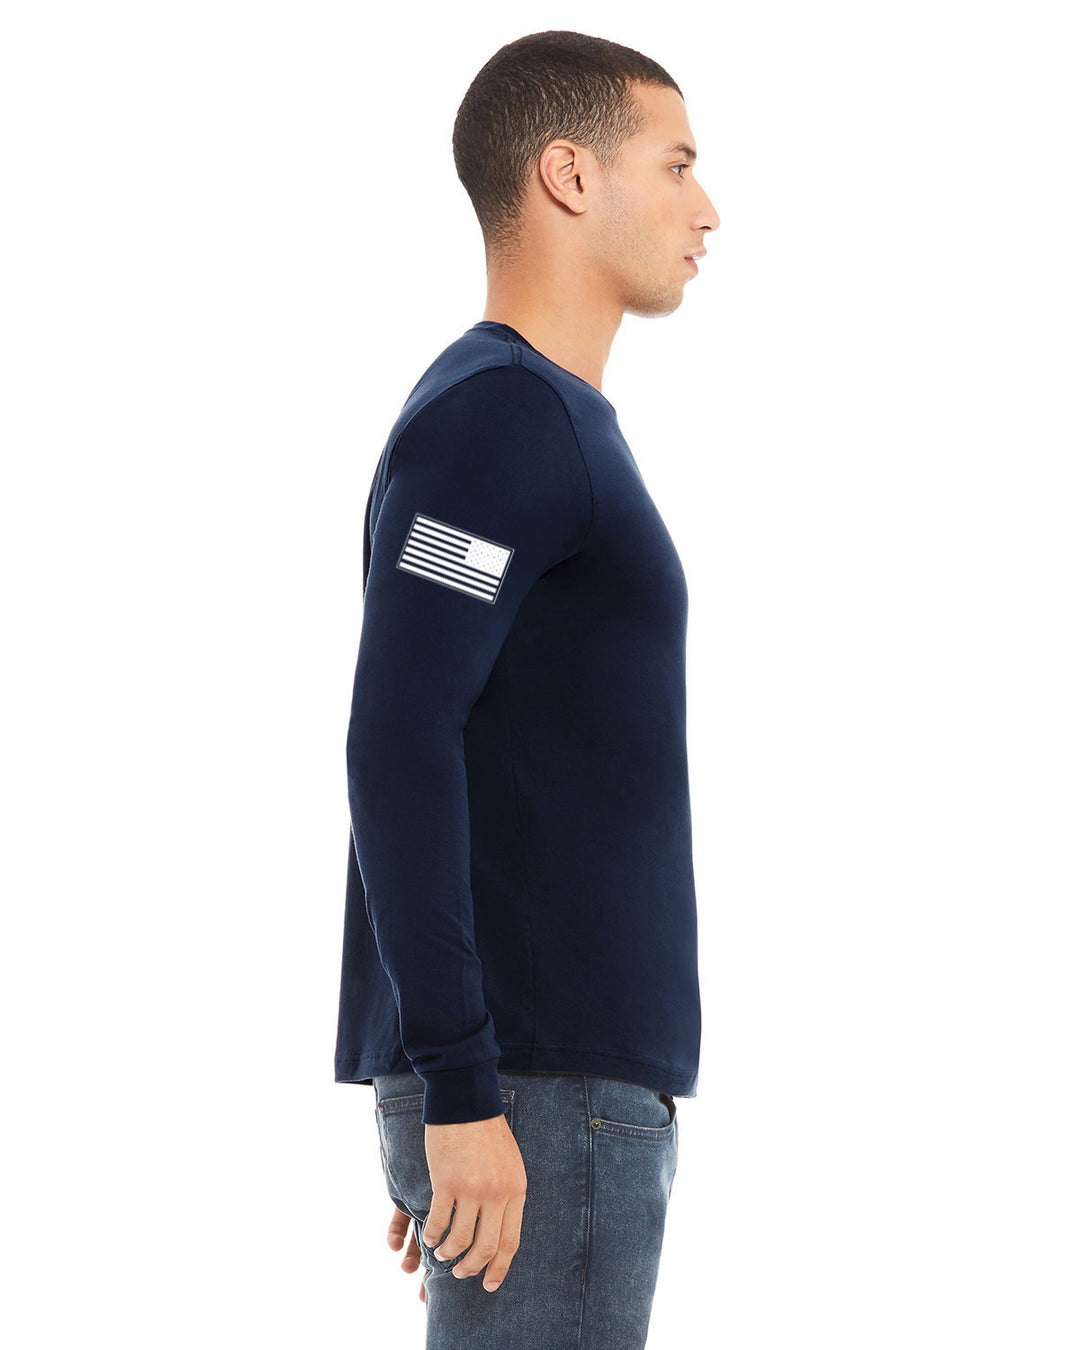 WPD St. Patrick Long Sleeve T-Shirt (3501)